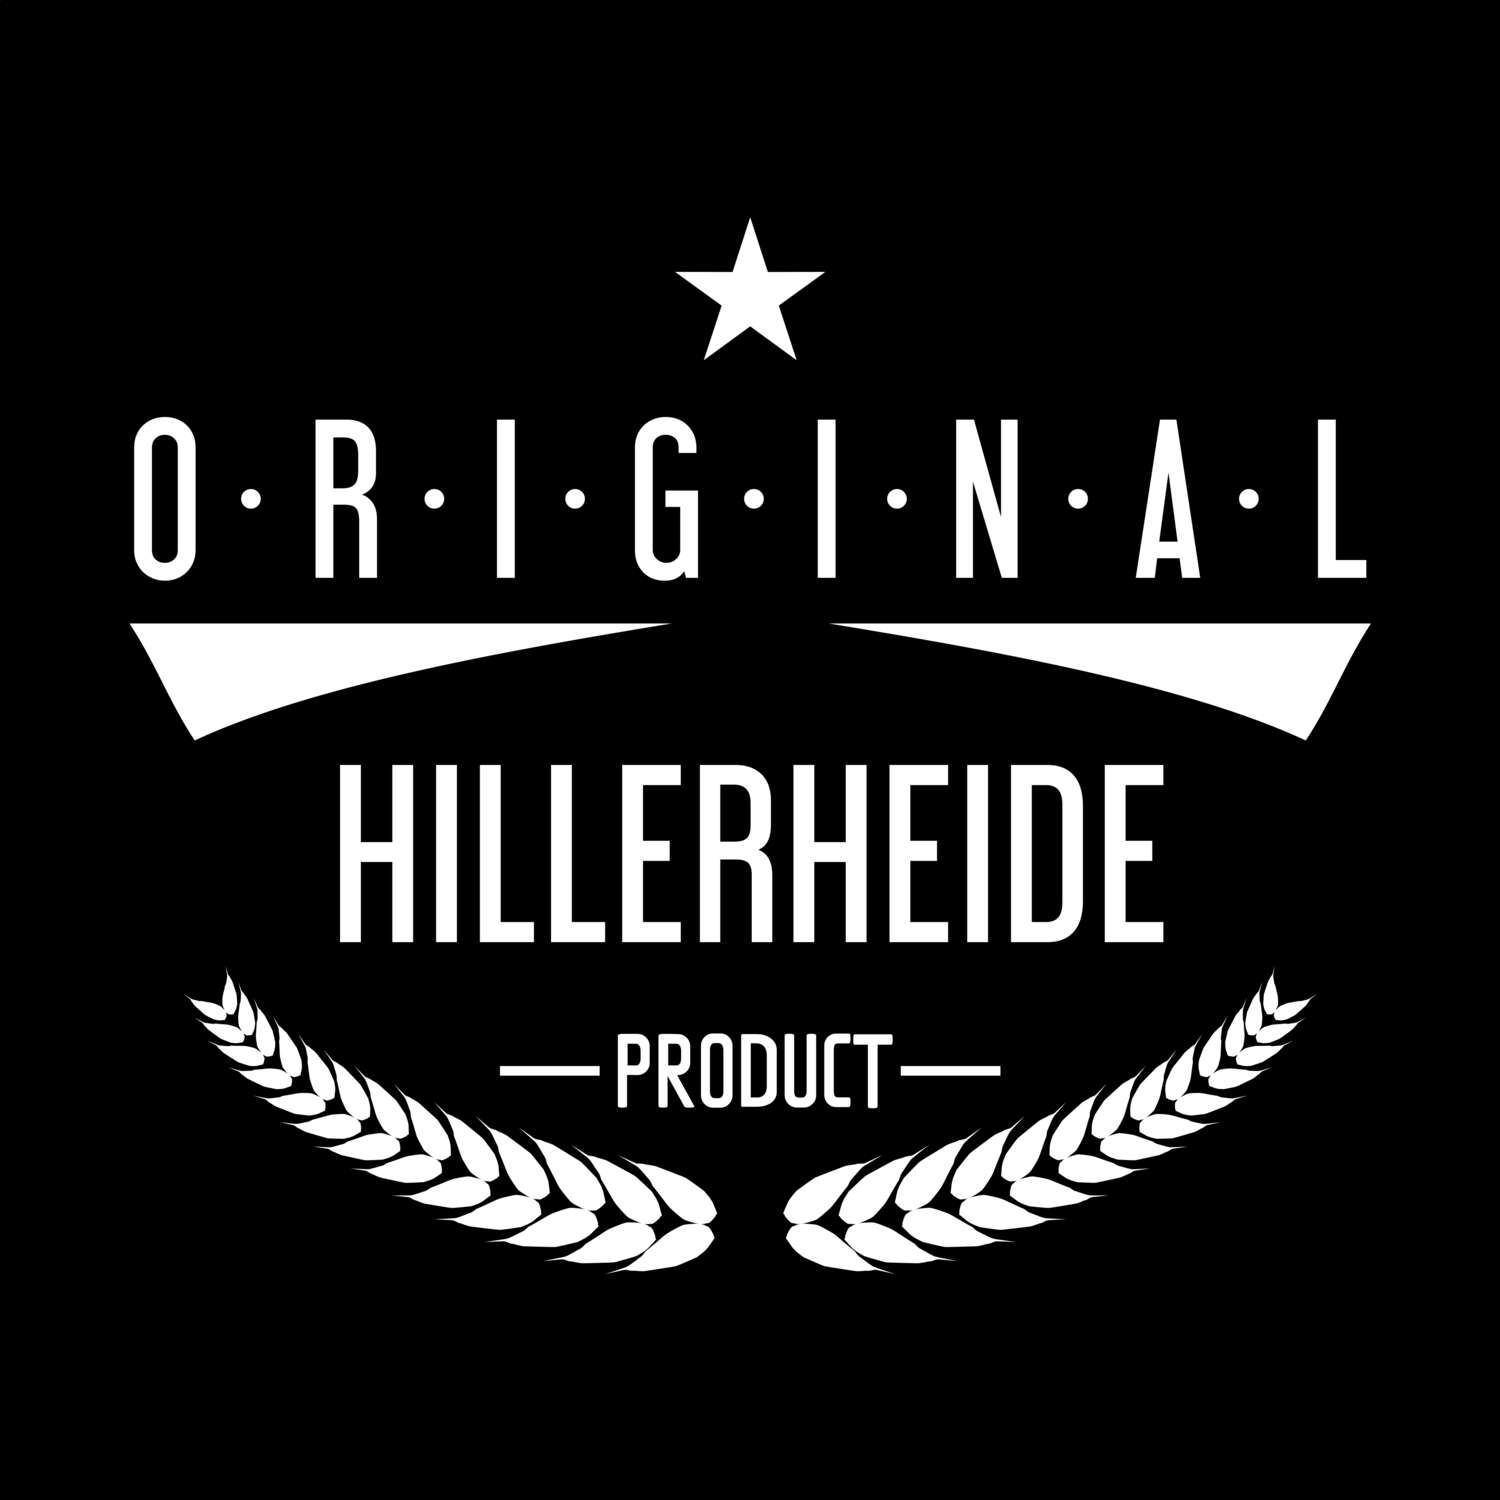 Hillerheide T-Shirt »Original Product«